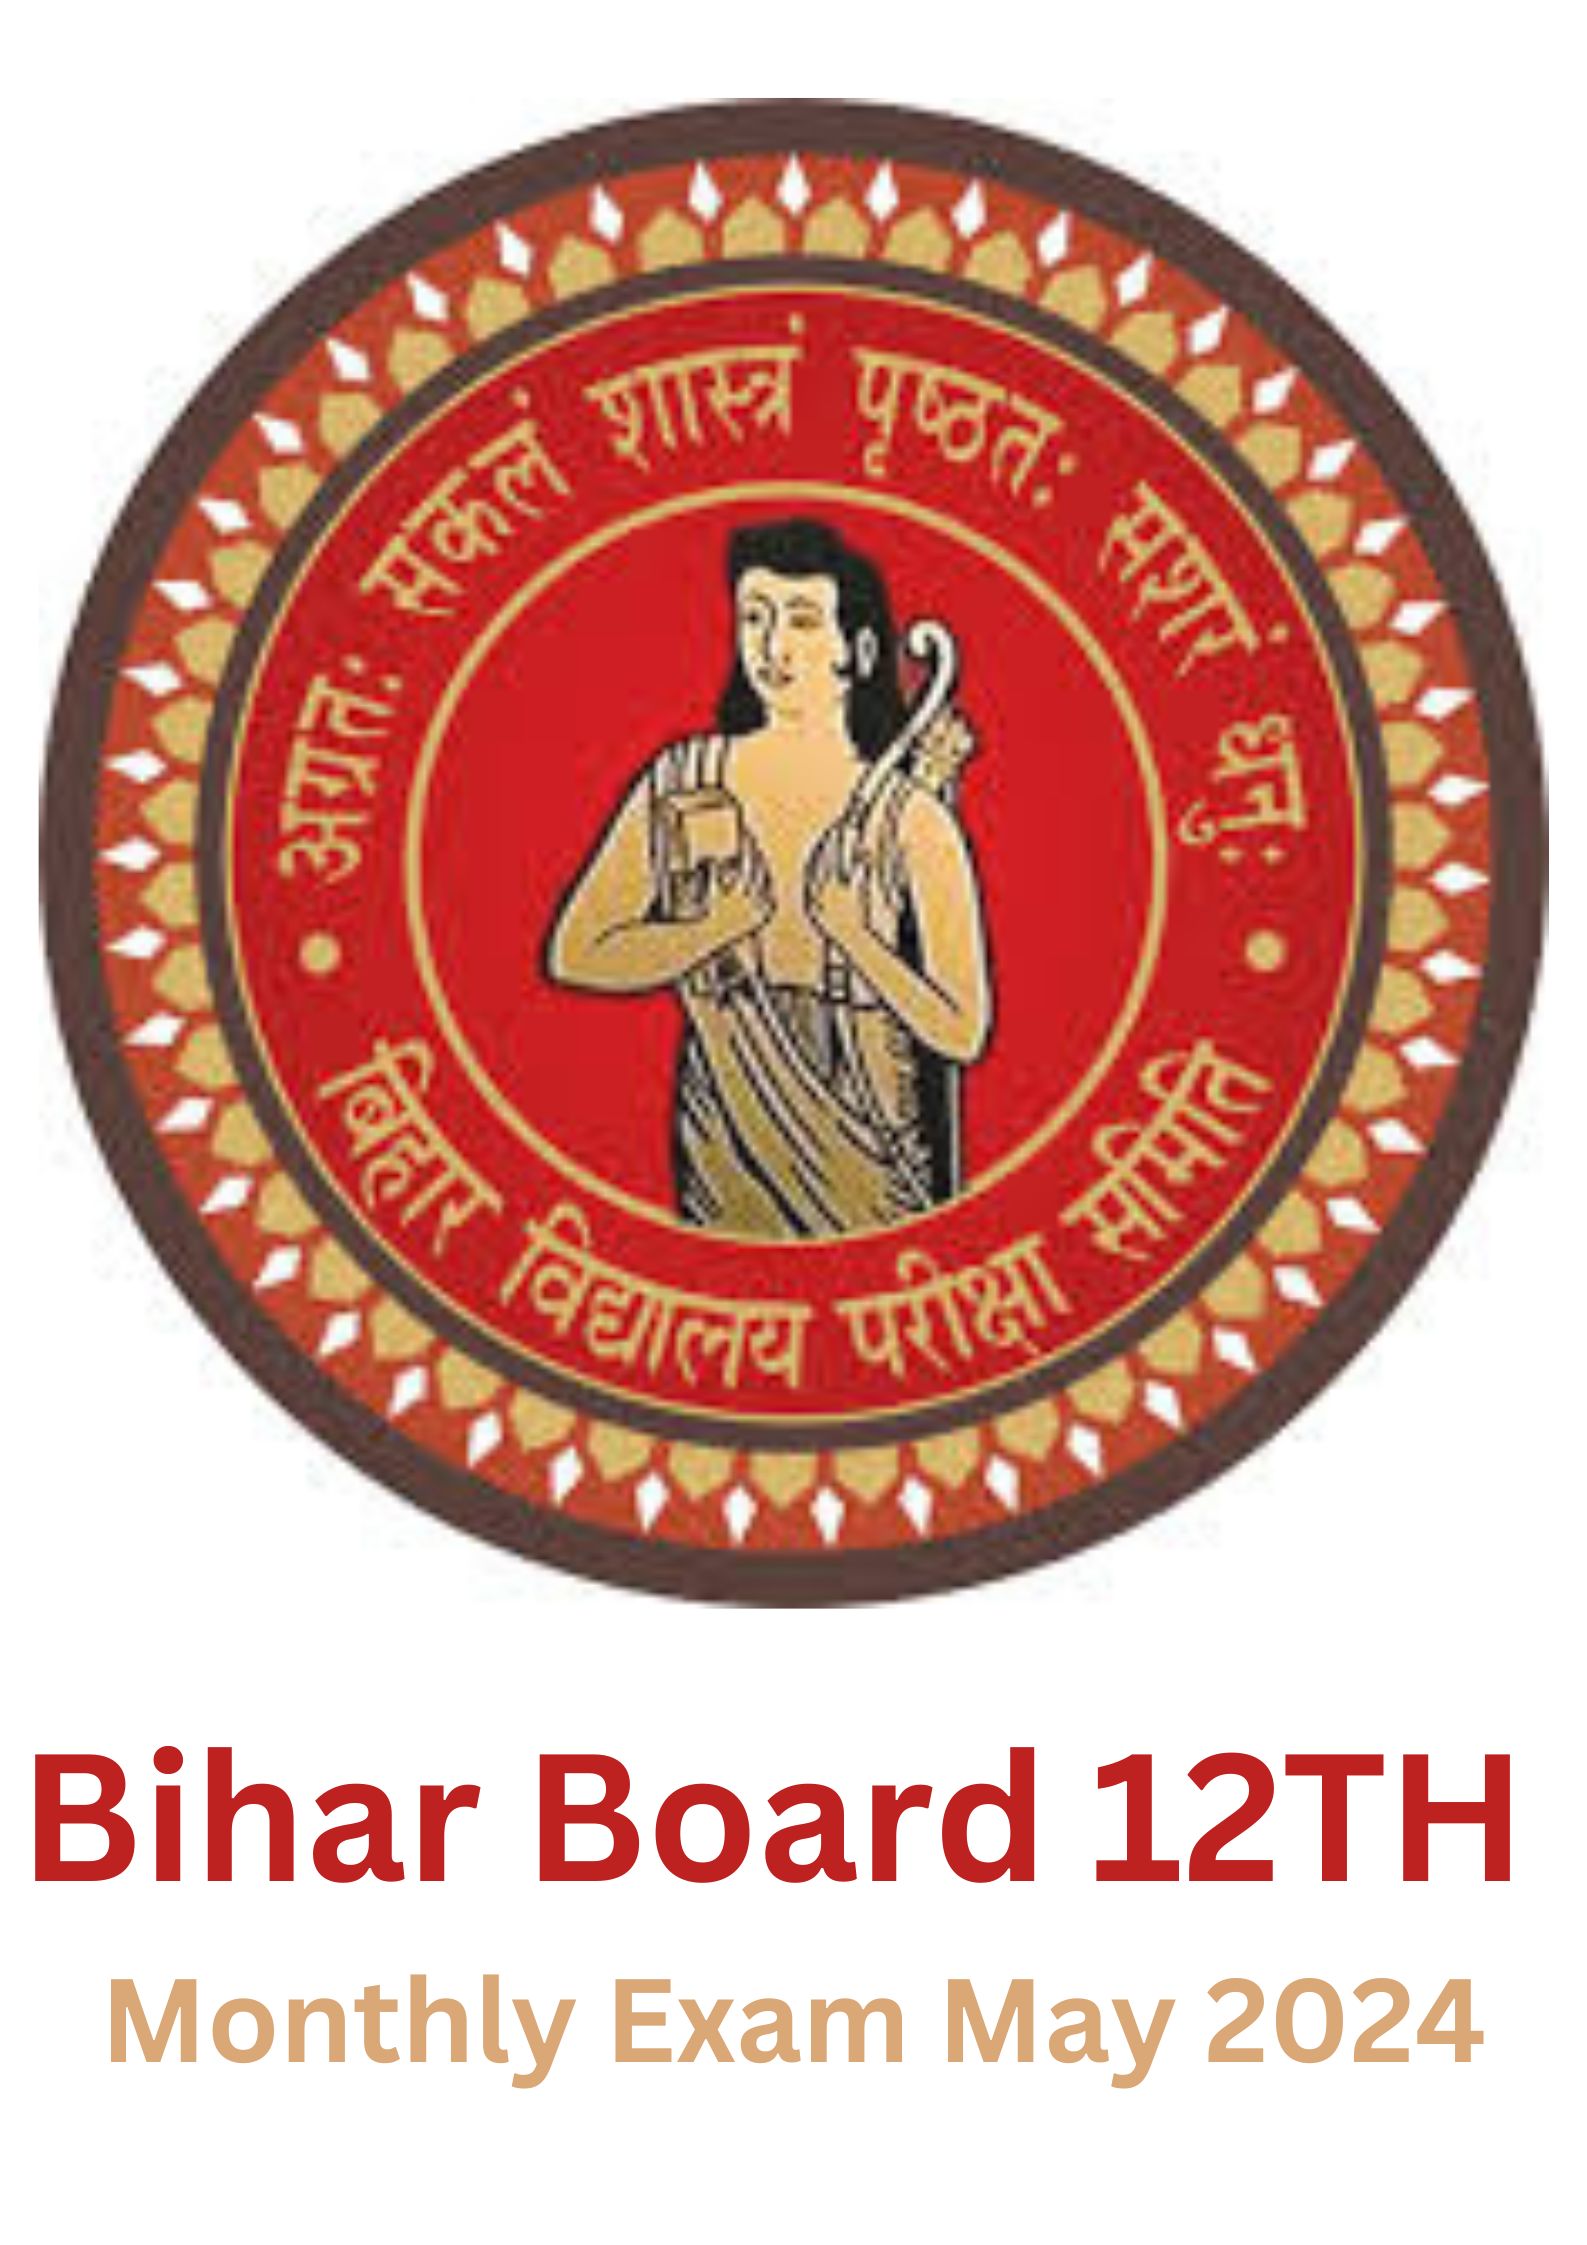 Bihar Board 12th Monthly Exam May 2024